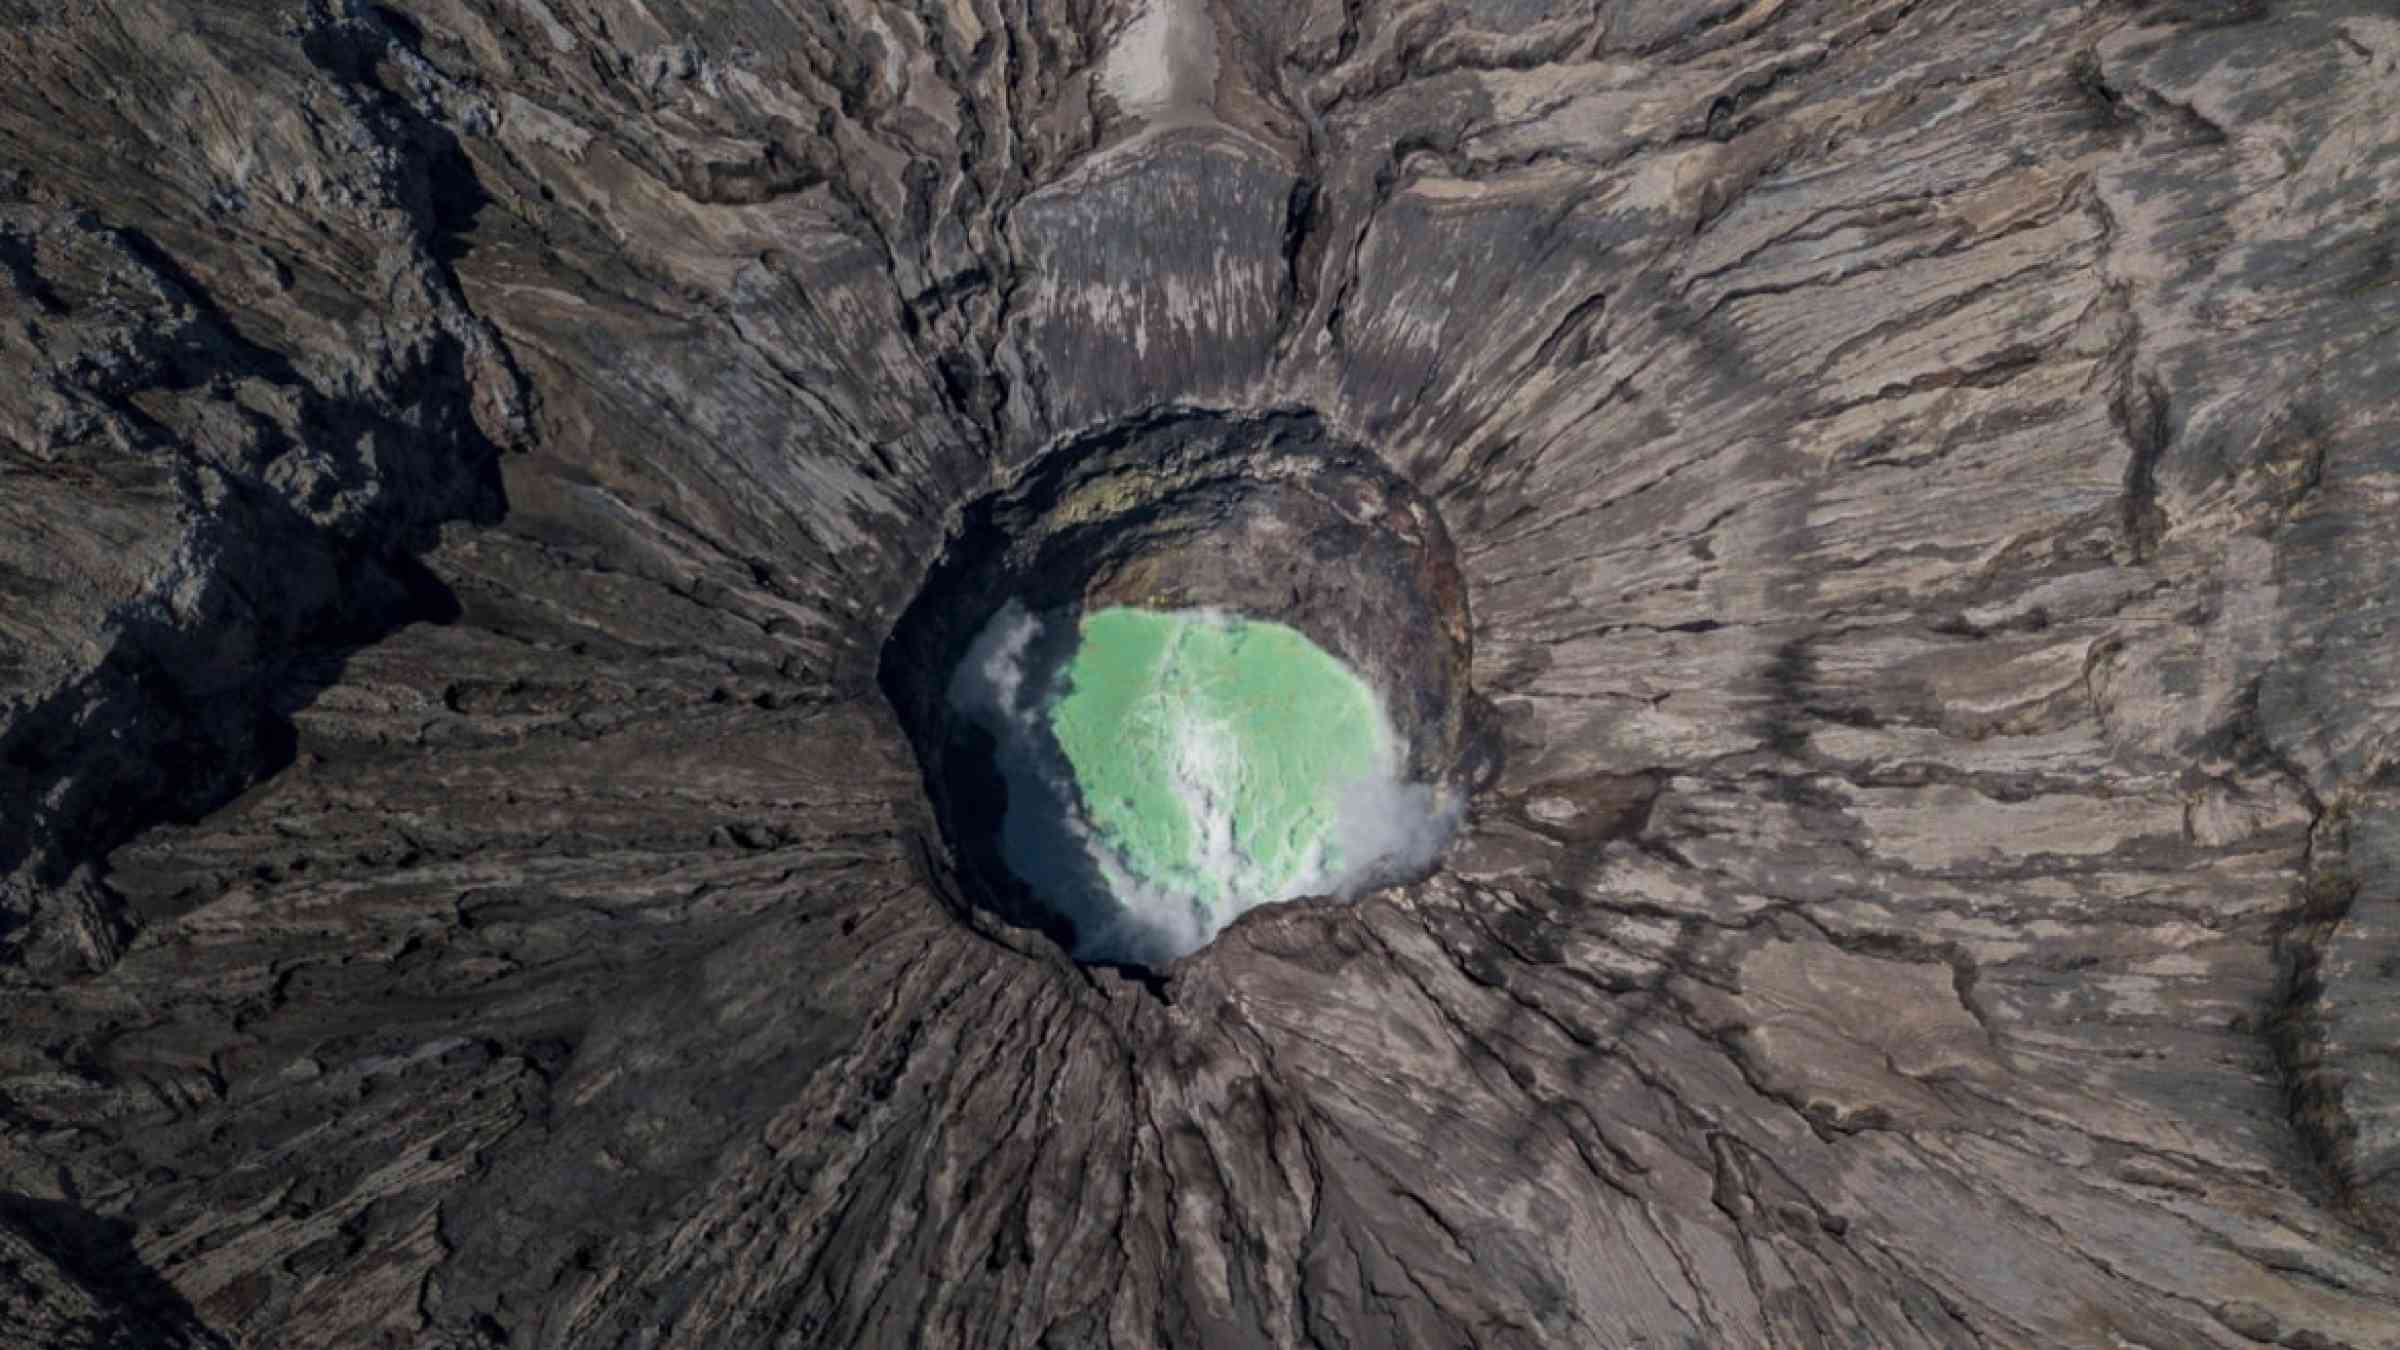 Overhead shot of a volcano